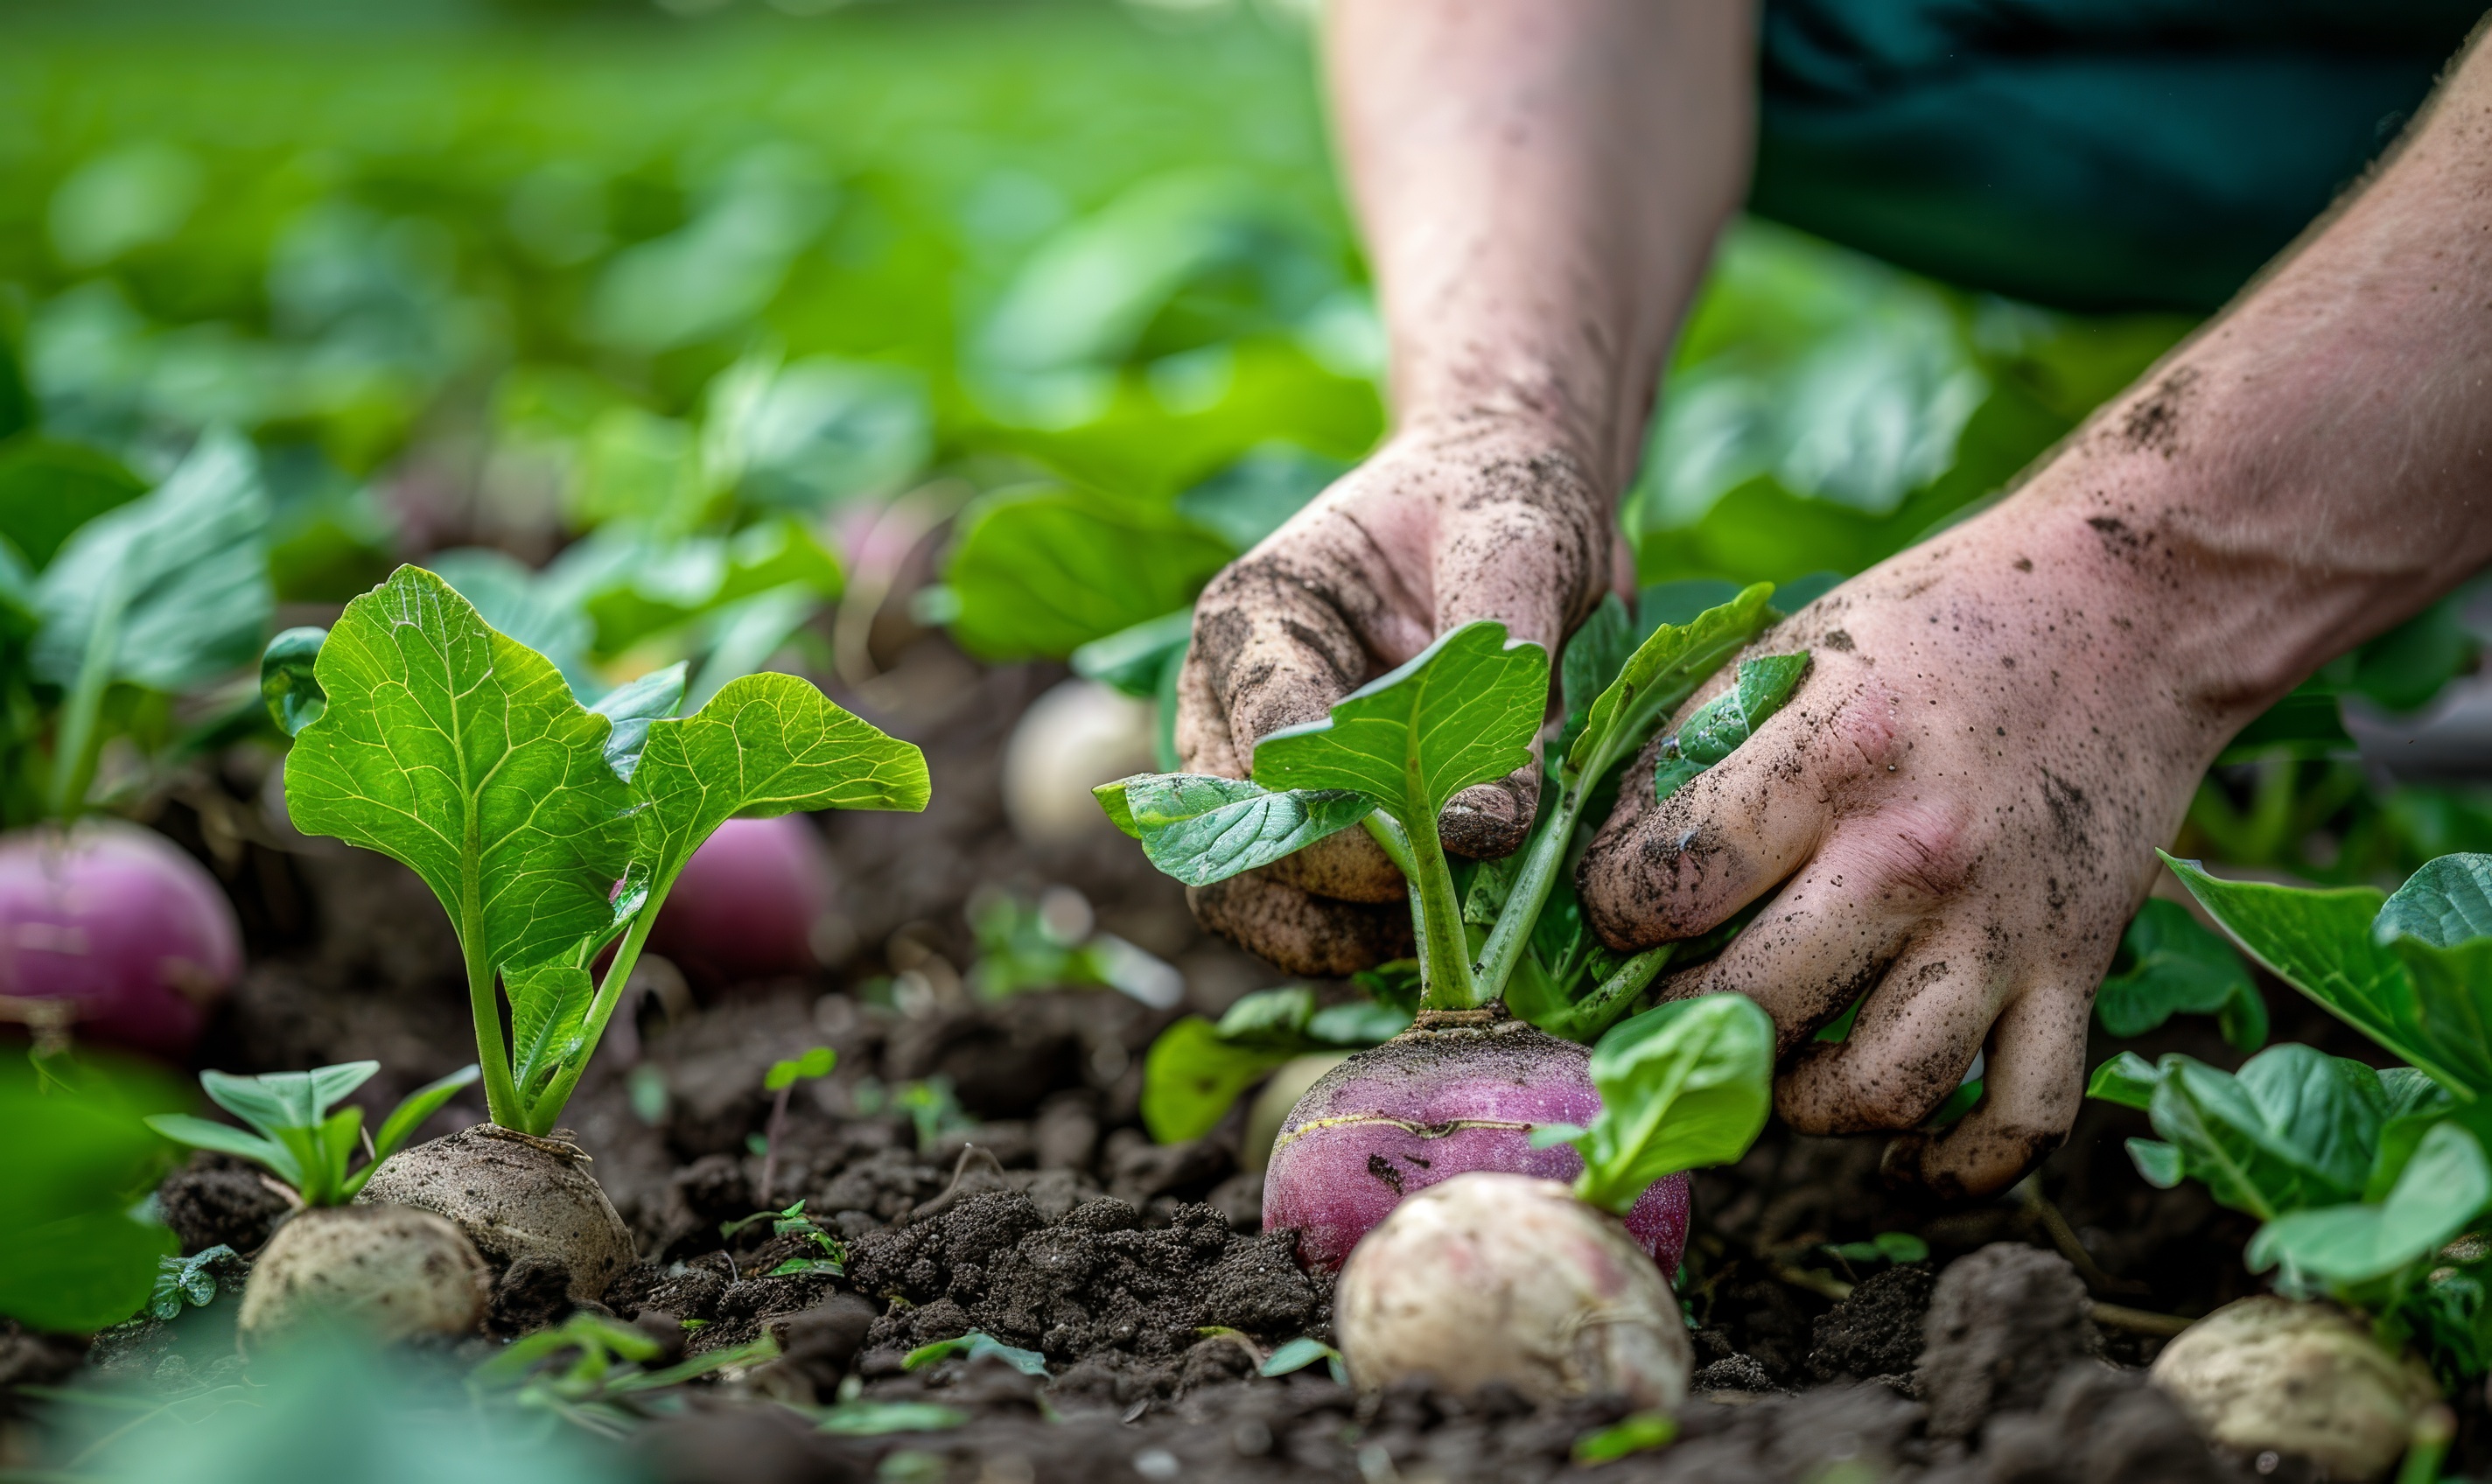 Gardener harvesting turnip roots in the spring